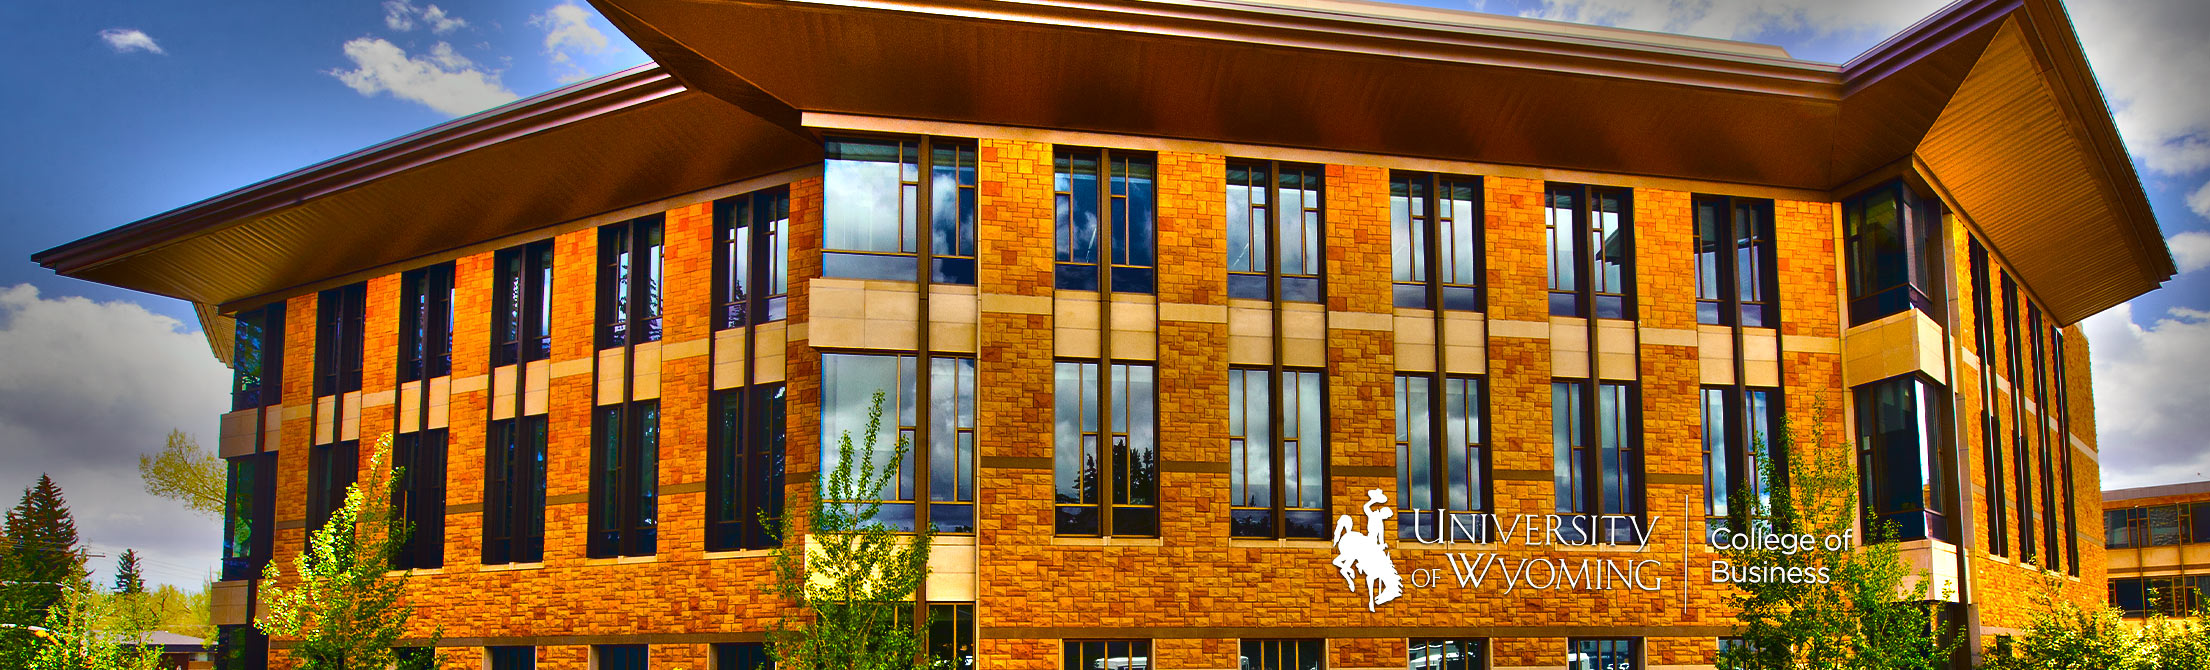 University of Wyoming MBA Program